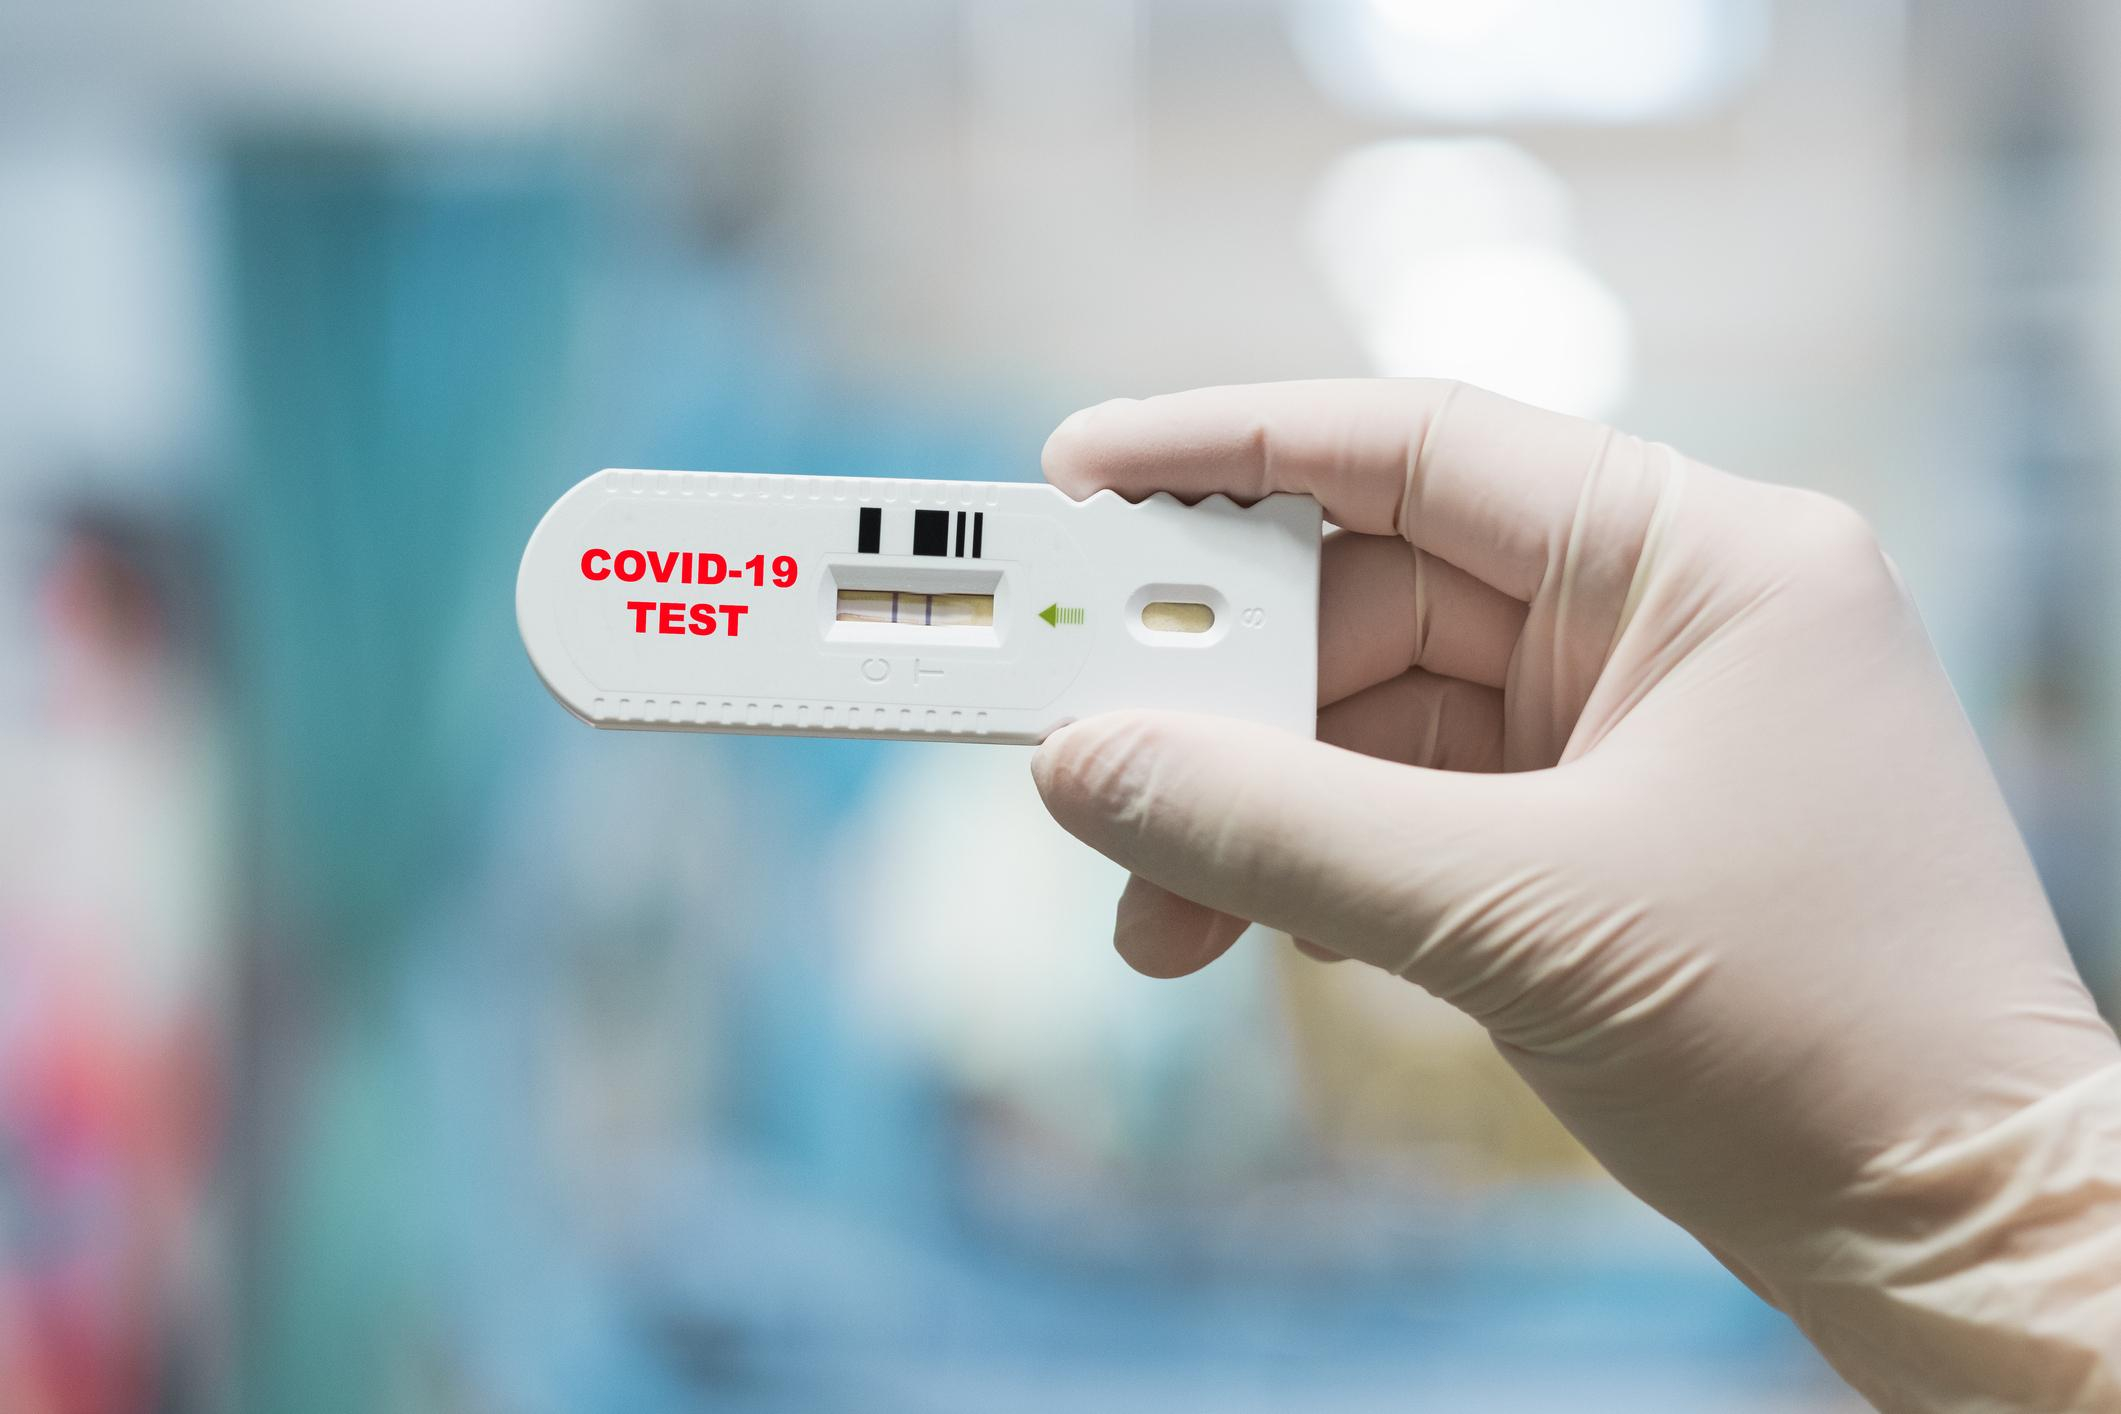 В Украине завершили испытания препарата "Биовен" для лечения COVID-19